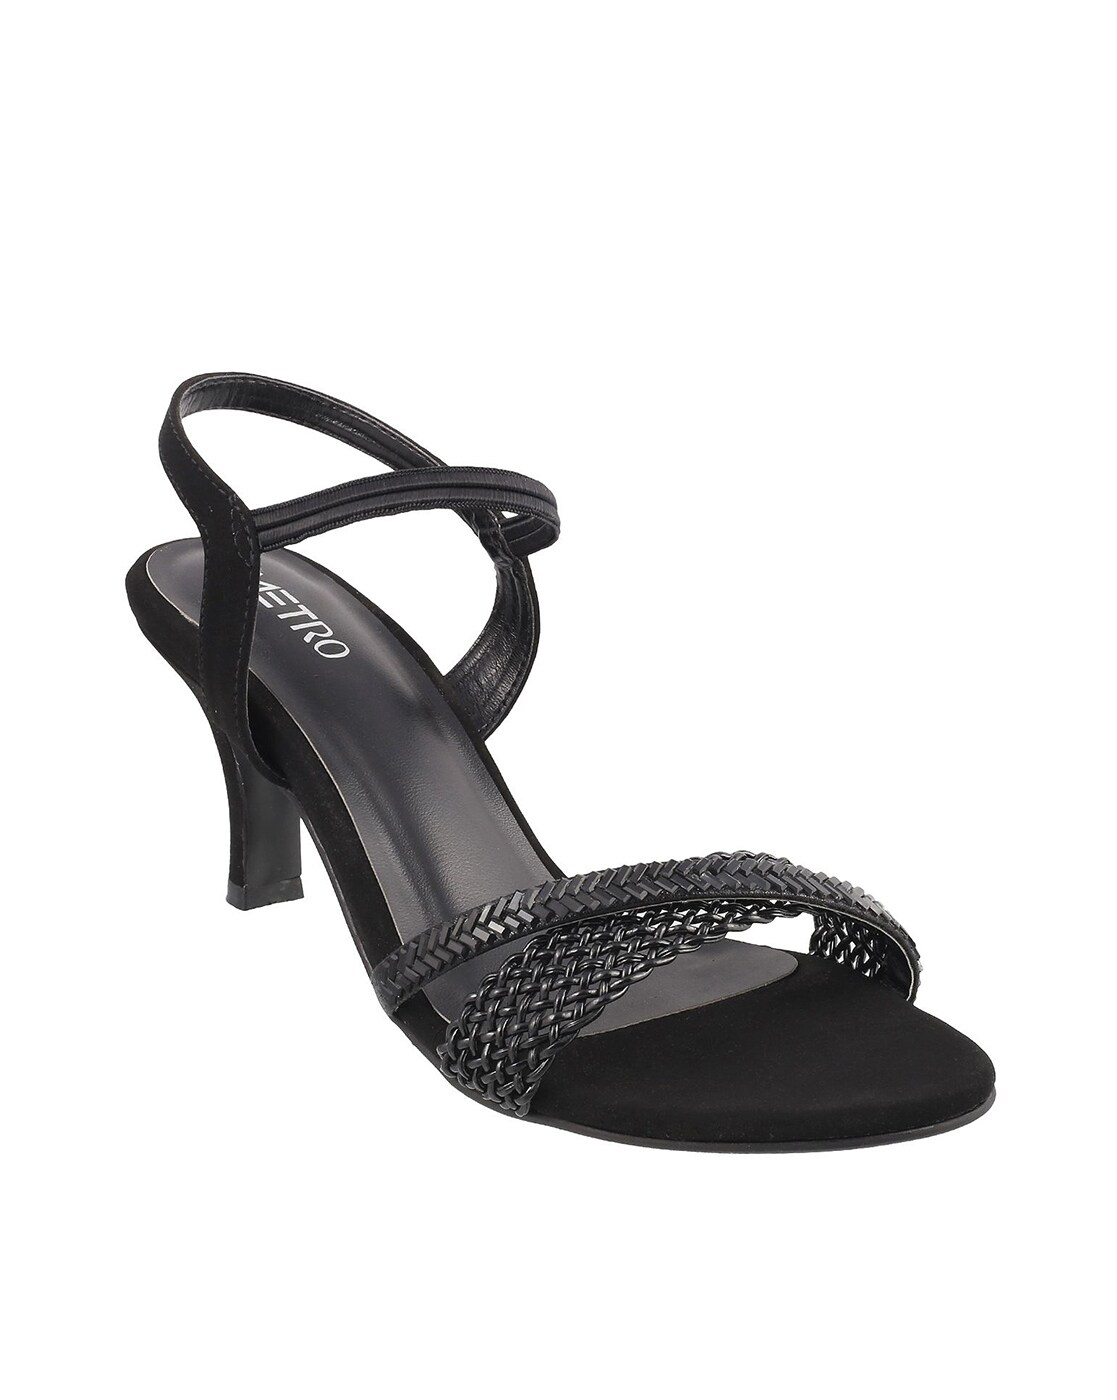 Buy Orange Heeled Sandals for Women by Metro Online | Ajio.com